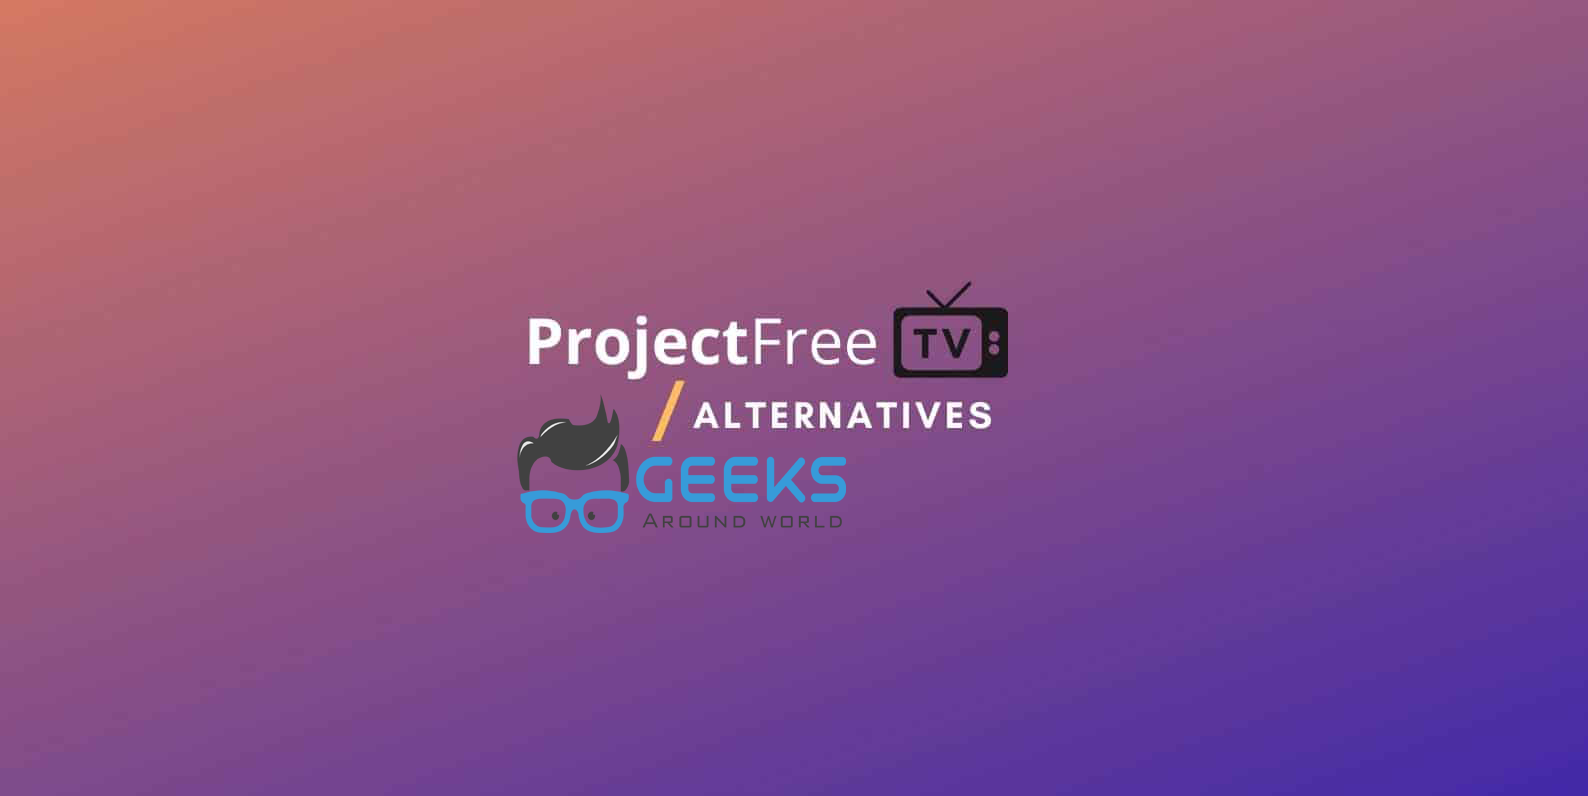 Best Project Free TV Alternatives